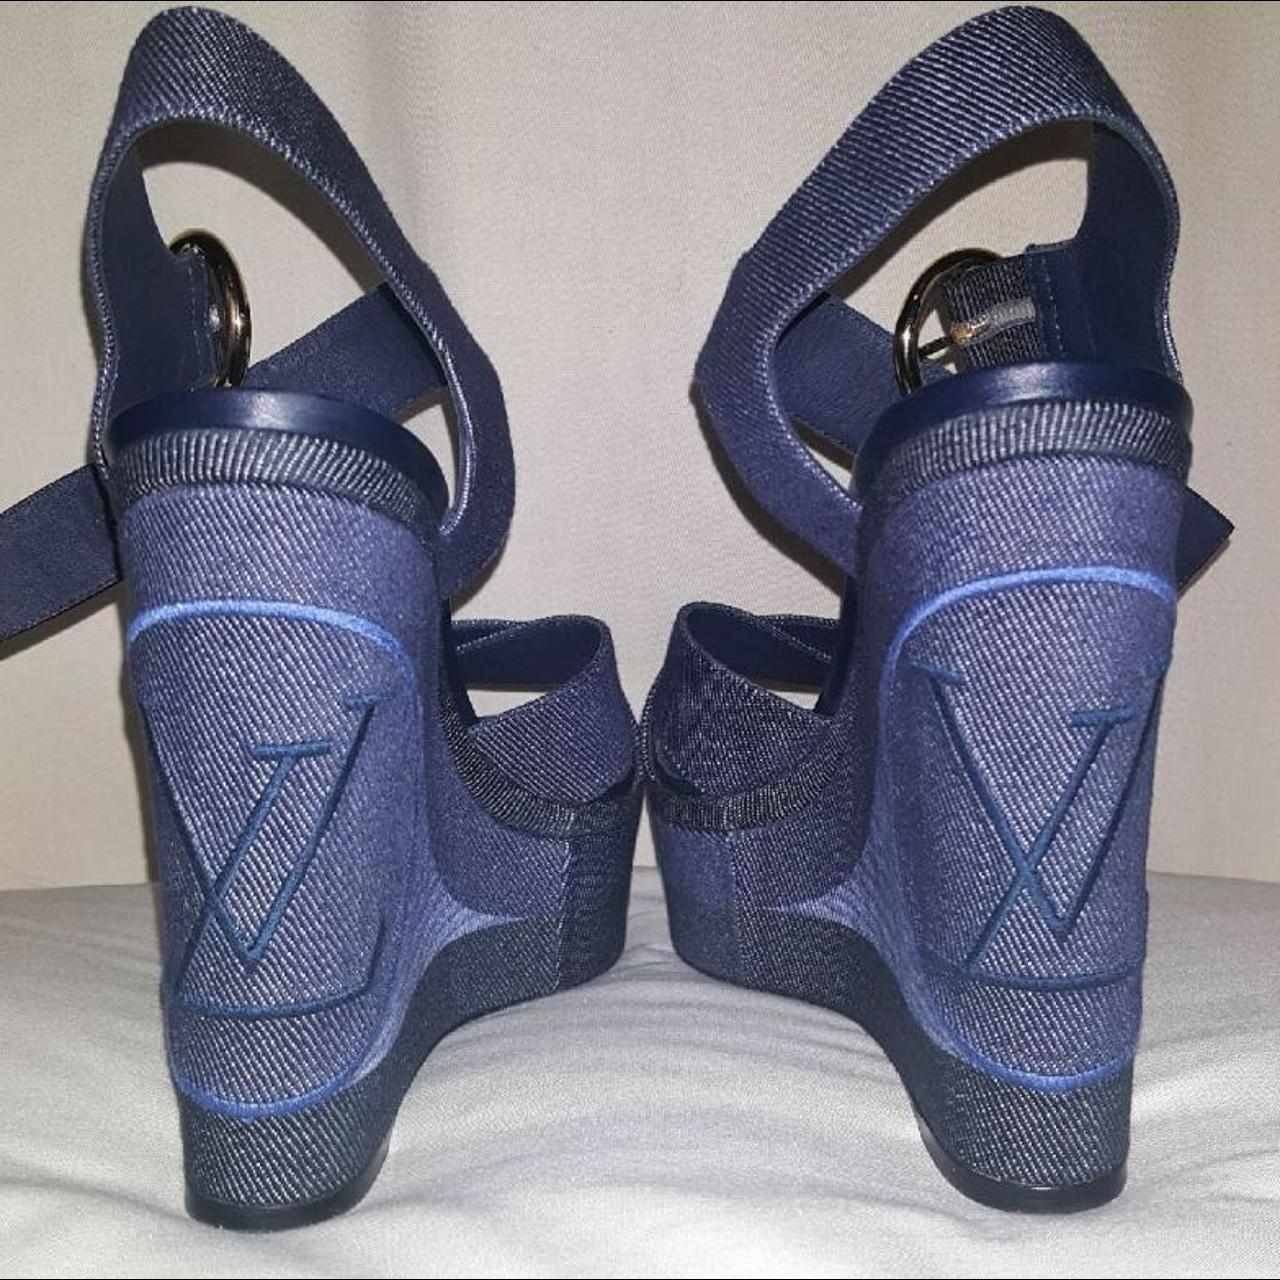 Louis Vuitton - Bleached Monogram Denim Wedge Sandals Blue 39